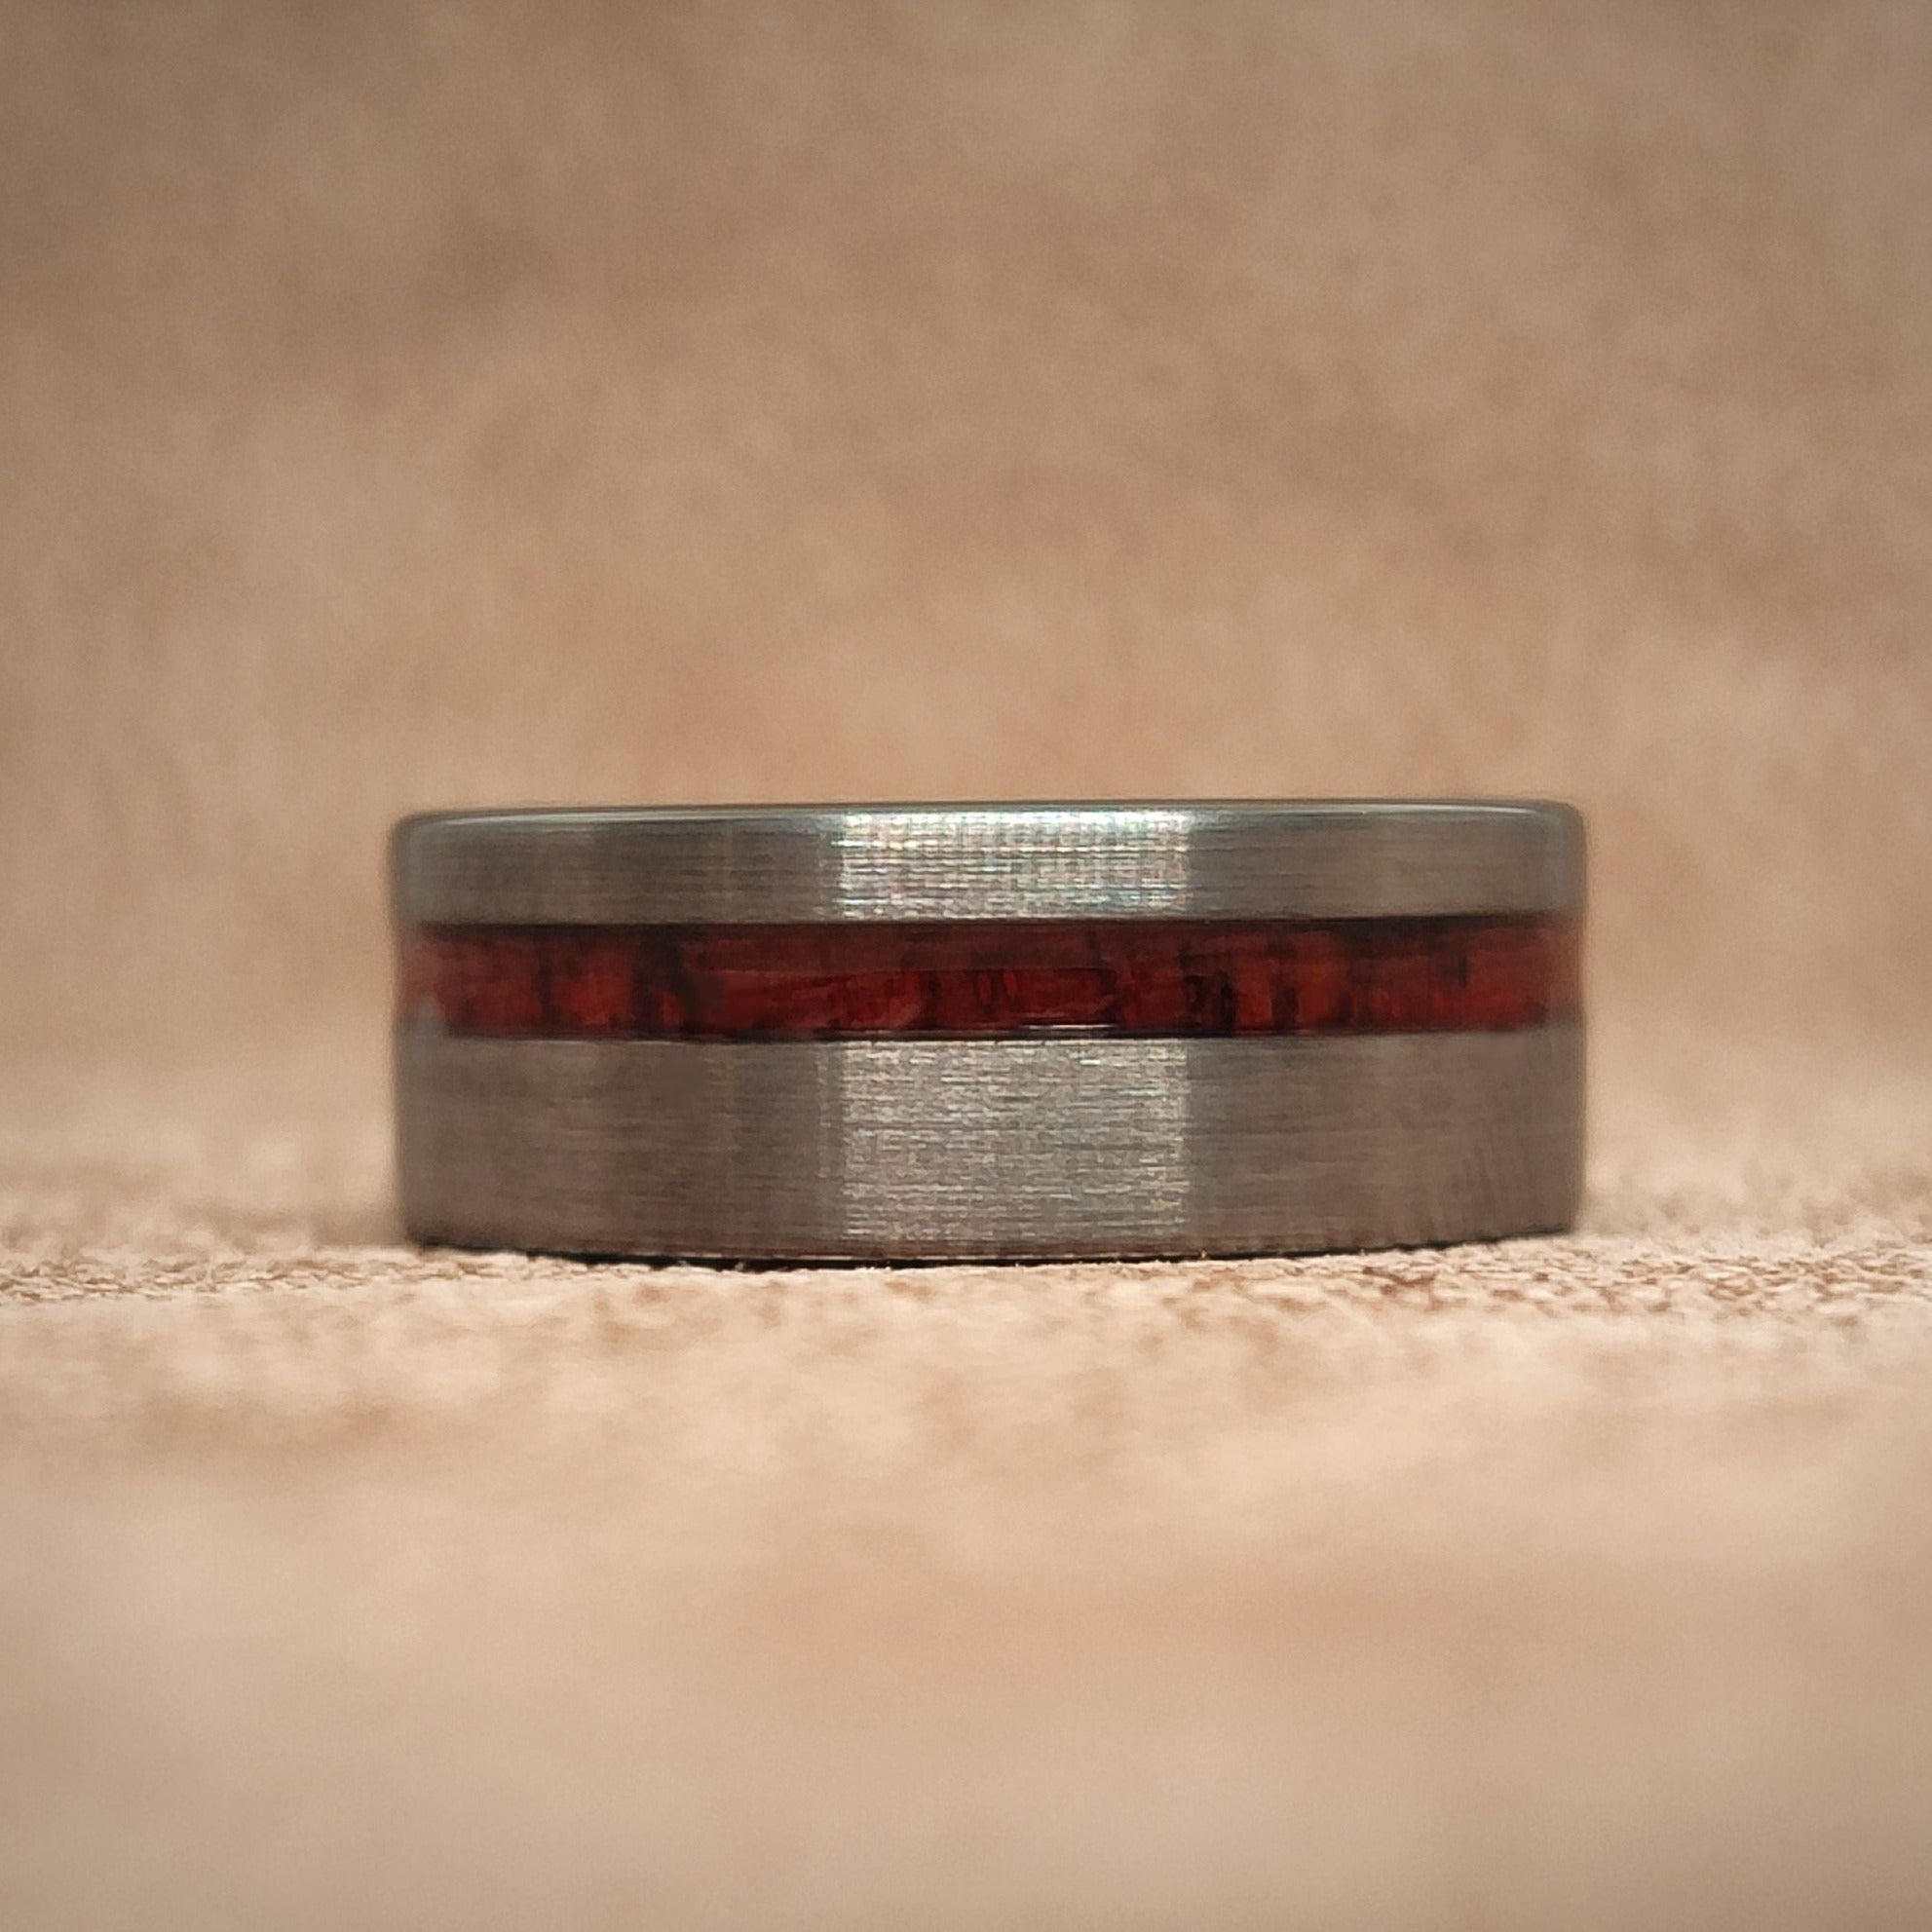 The Gun Red - Rosewood Men's Tungsten Ring